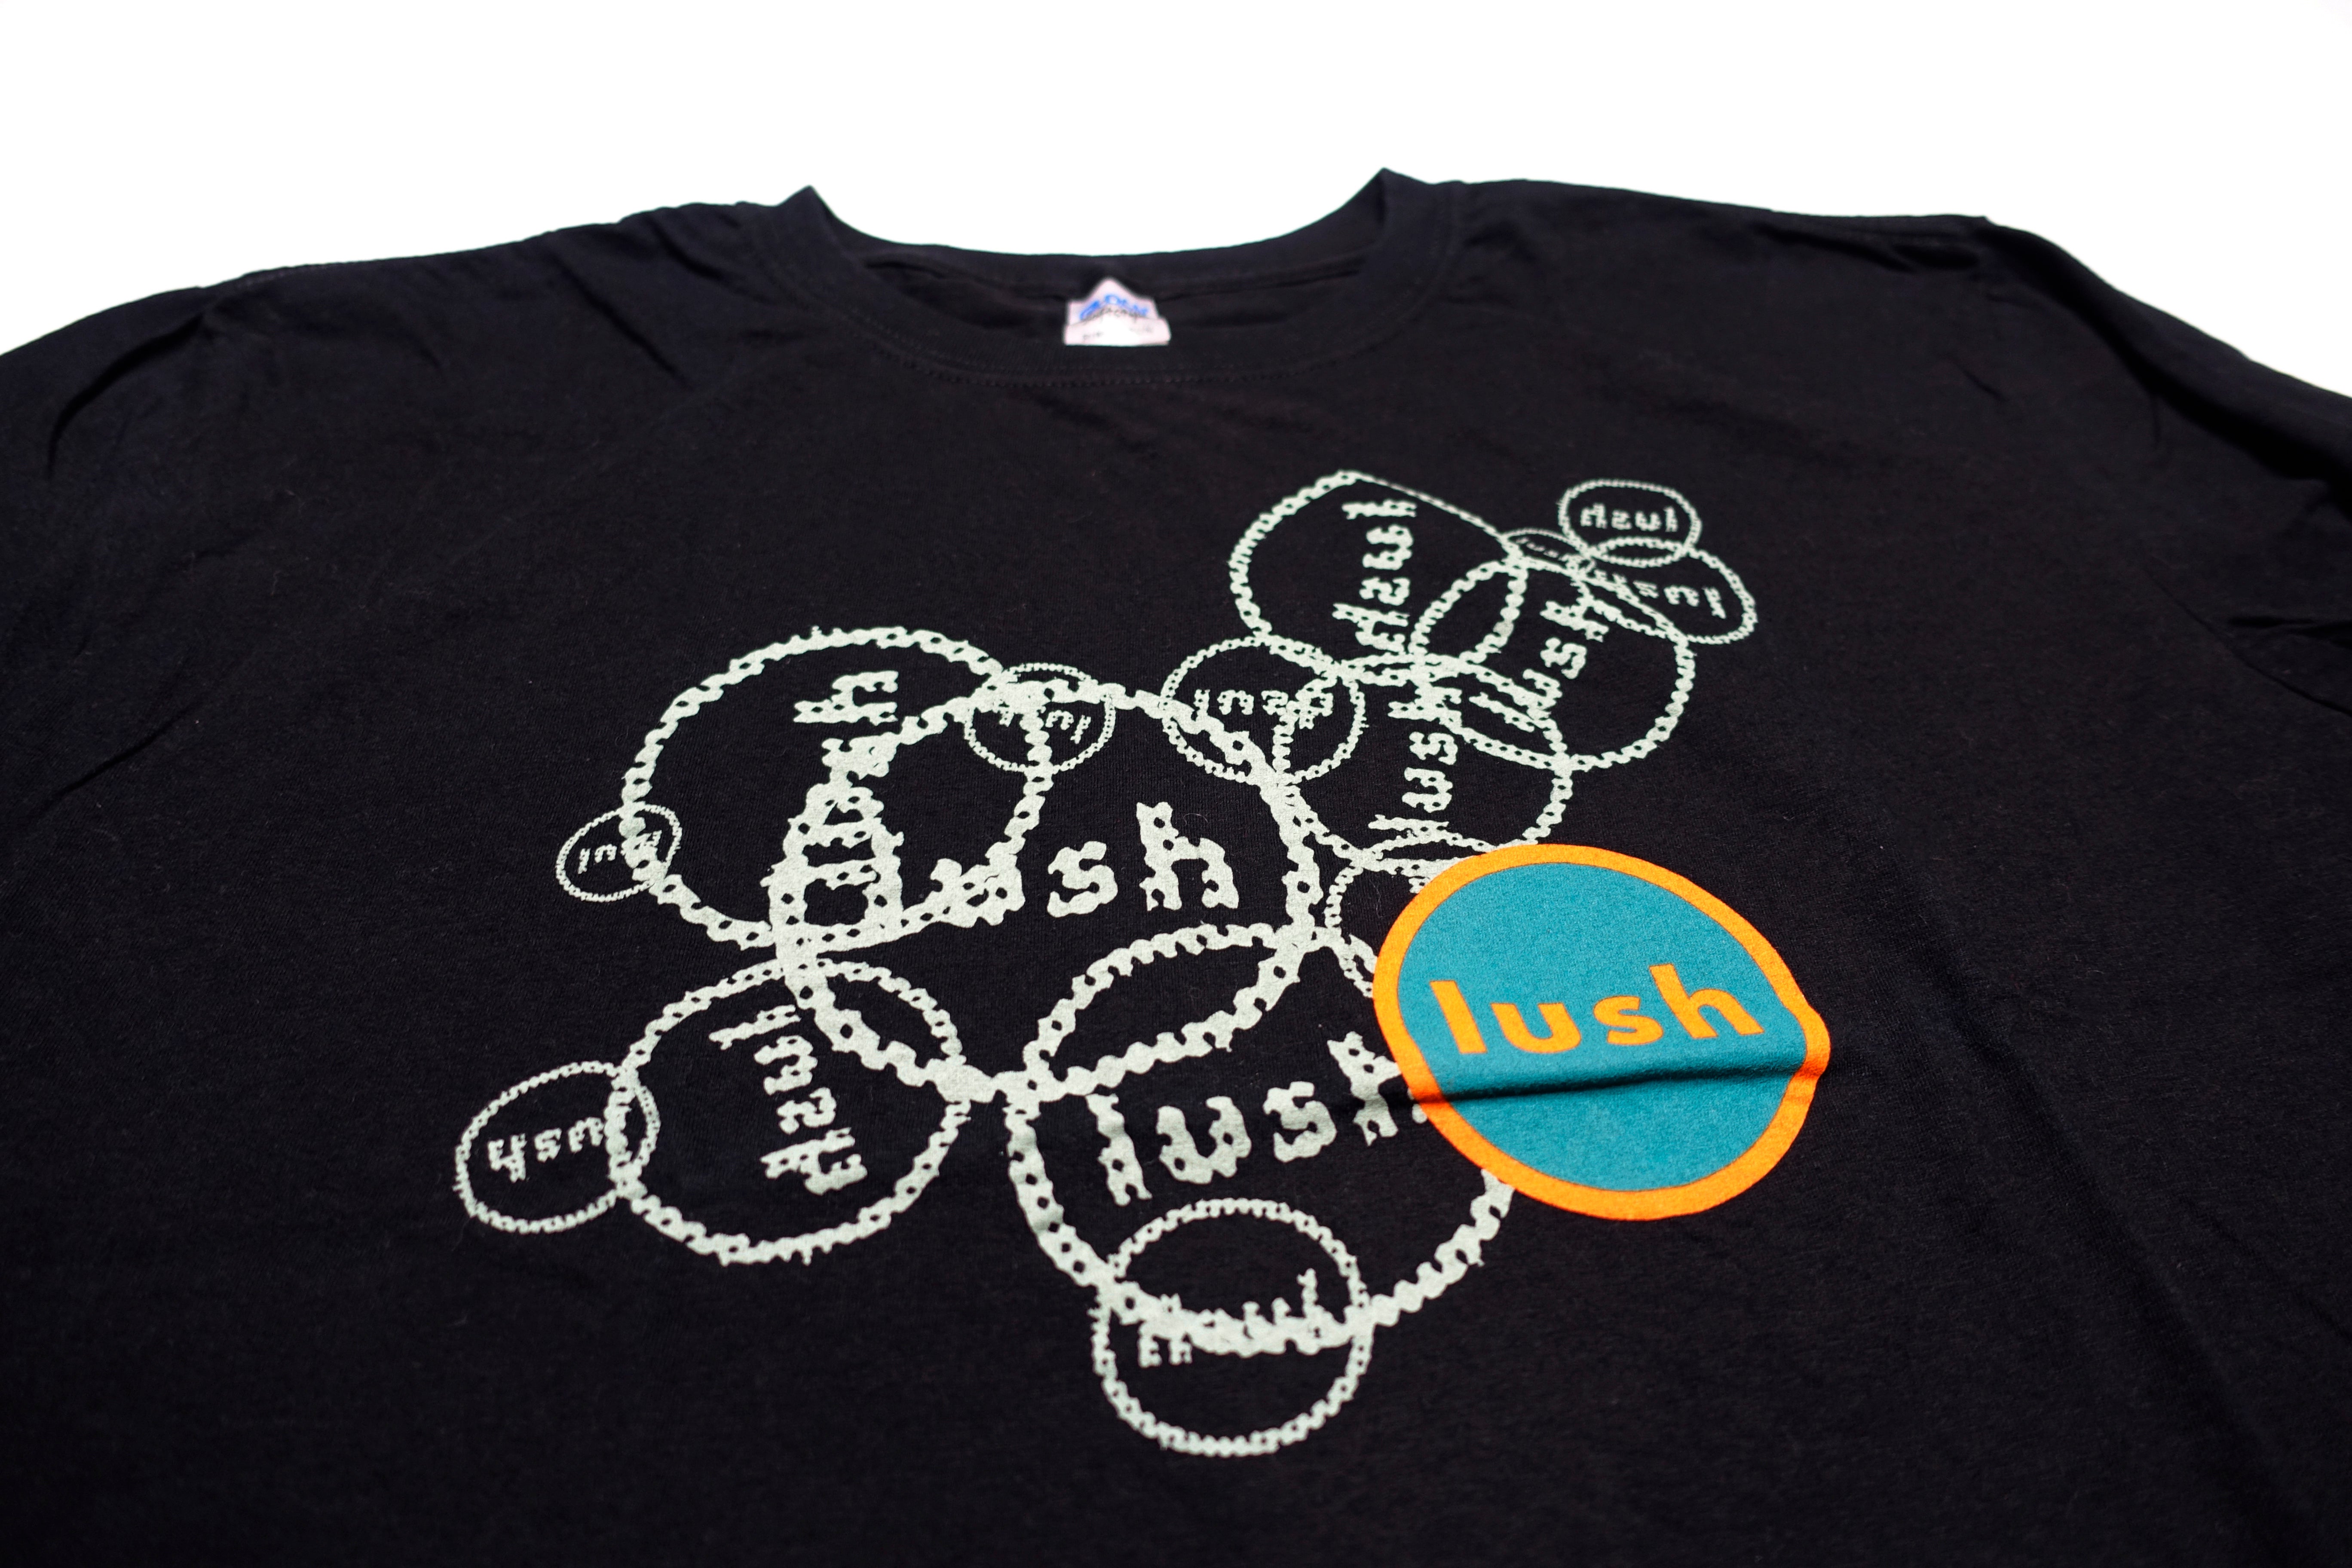 Lush - Repeating Circles 2016 Tour Shirt Size XL